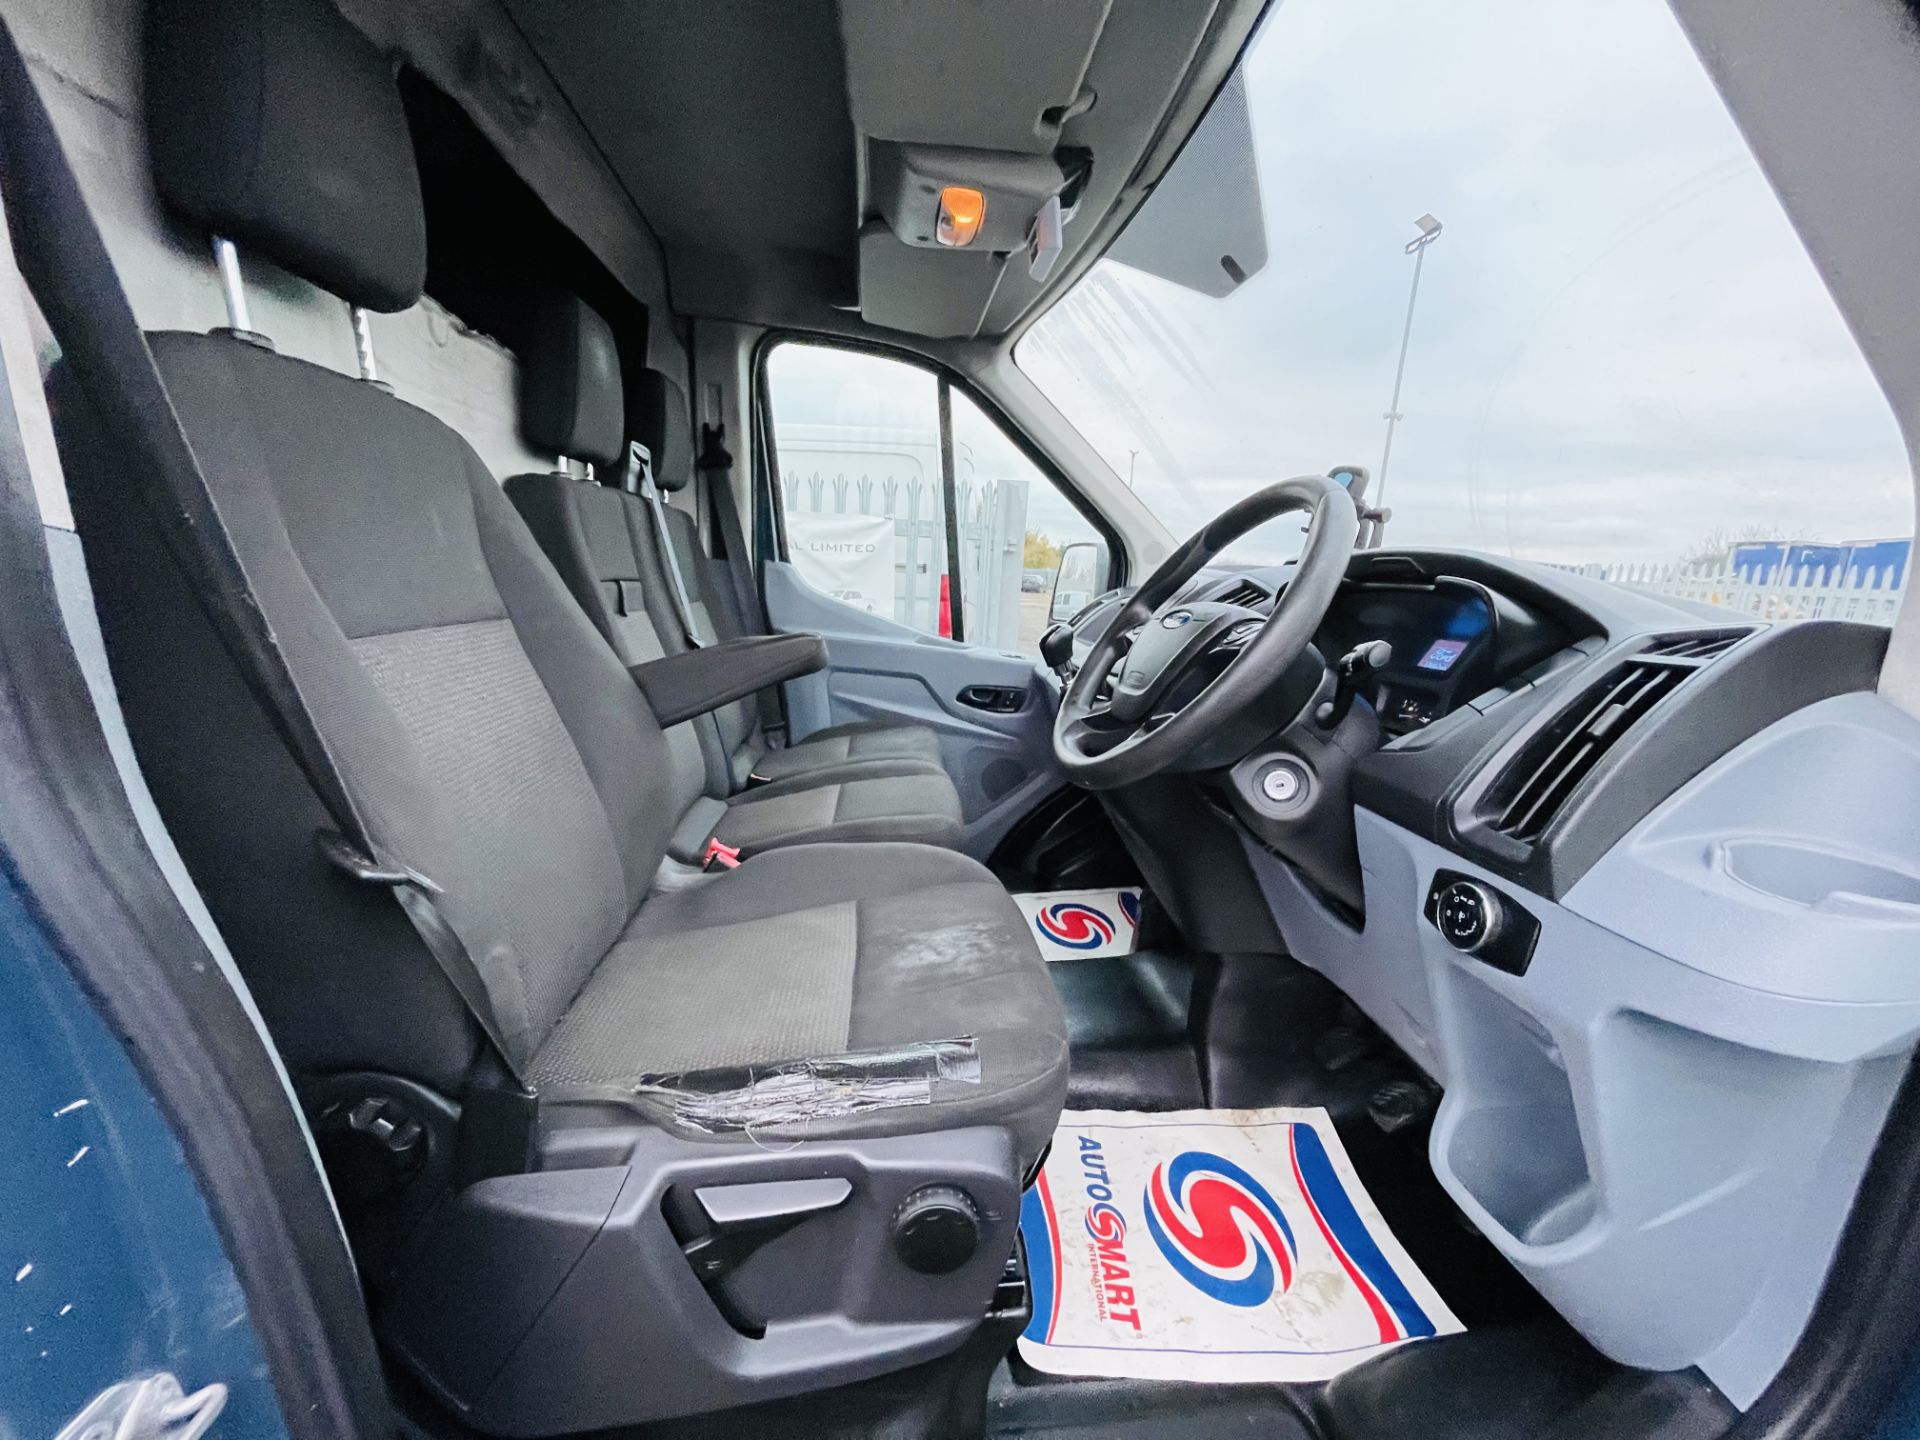 Ford Transit 2.2 TDCI 125 T350 L3 H3 2014 '14 Reg' - Panel Van - No Vat Save 20% - Image 18 of 21